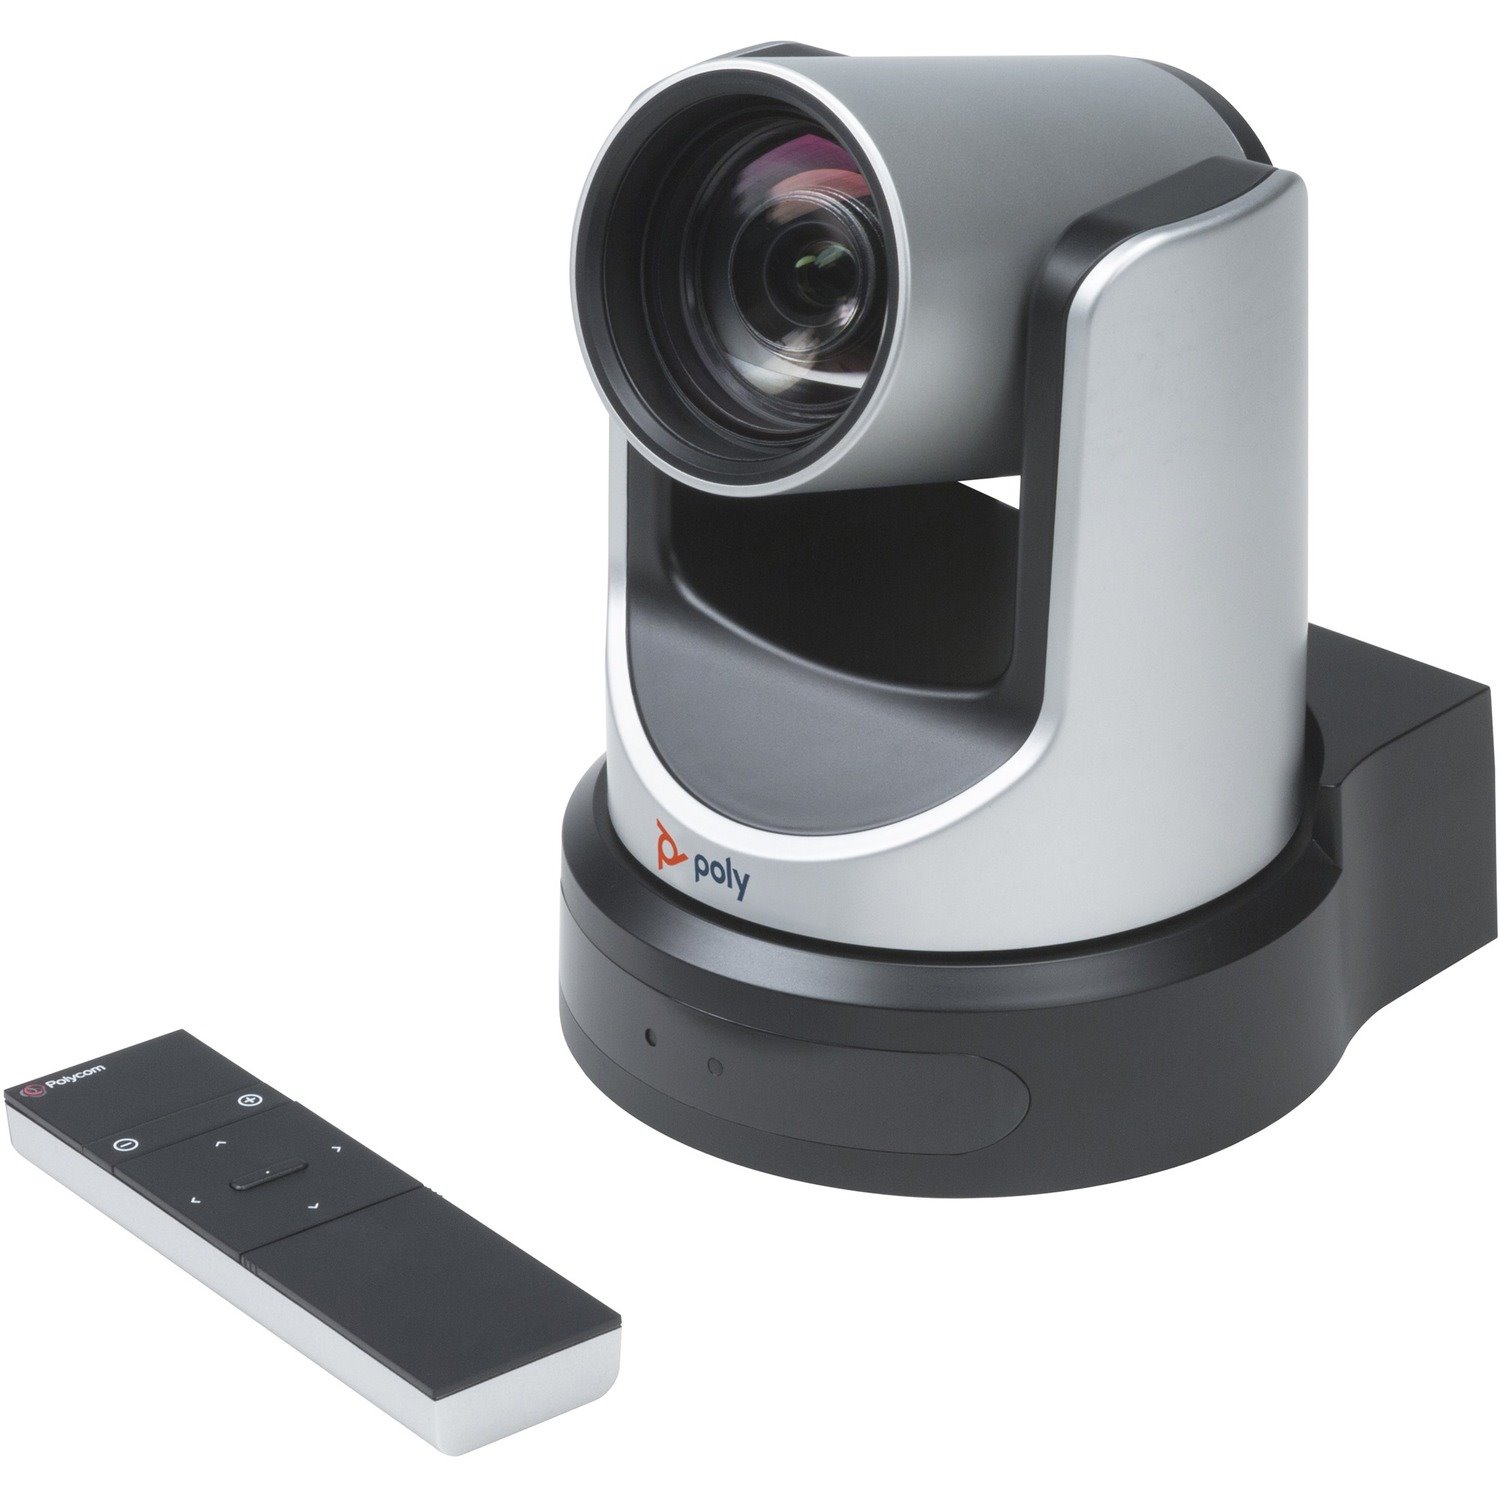 Poly EagleEye IV Video Conferencing Camera - 30 fps - USB 2.0